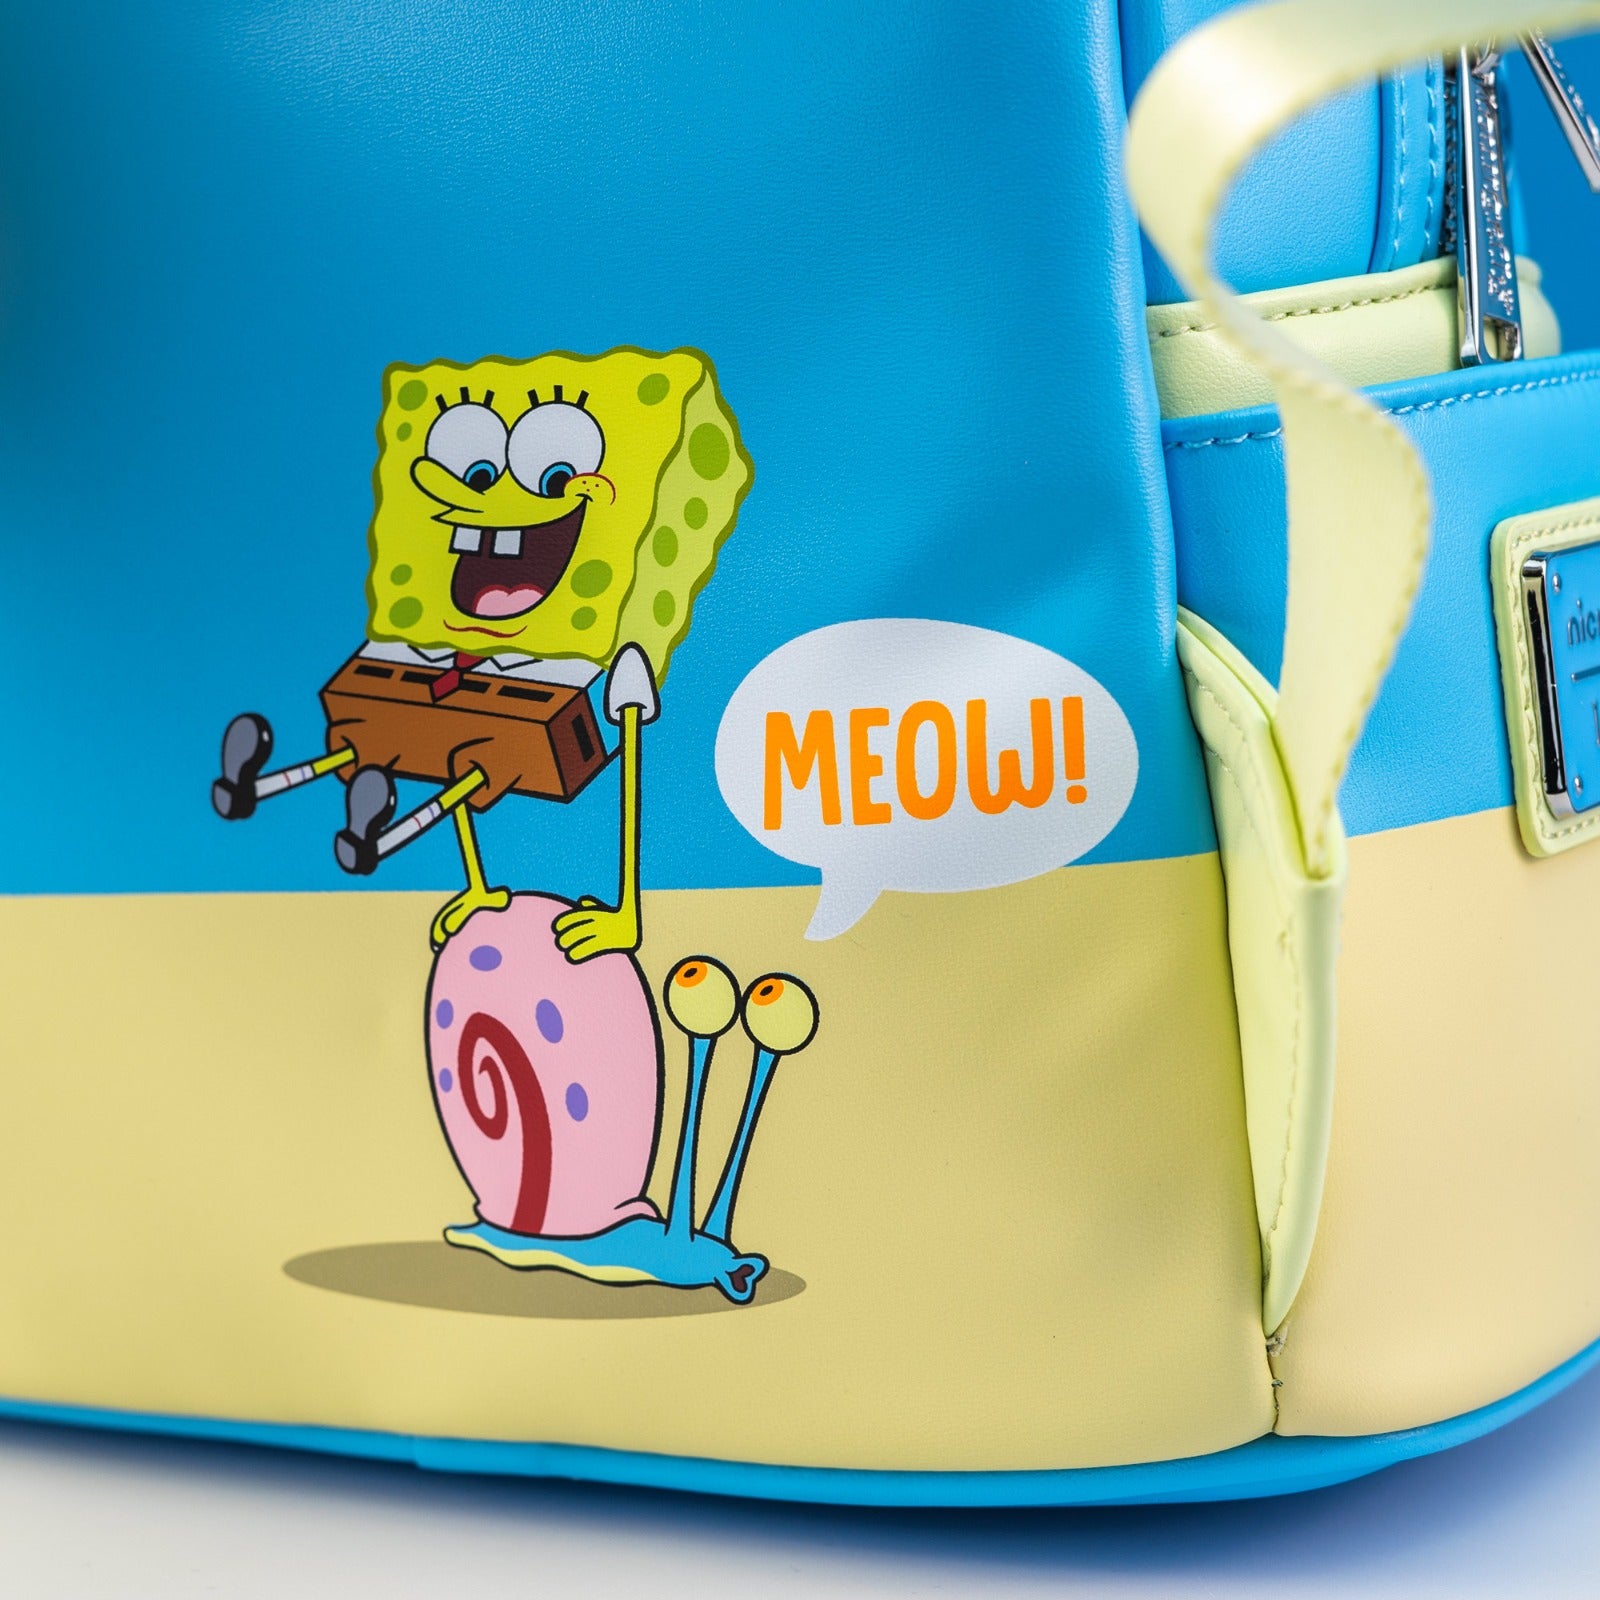 Loungefly x Nickelodeon SpongeBob Squarepants Gary Cosplay Mini Backpack